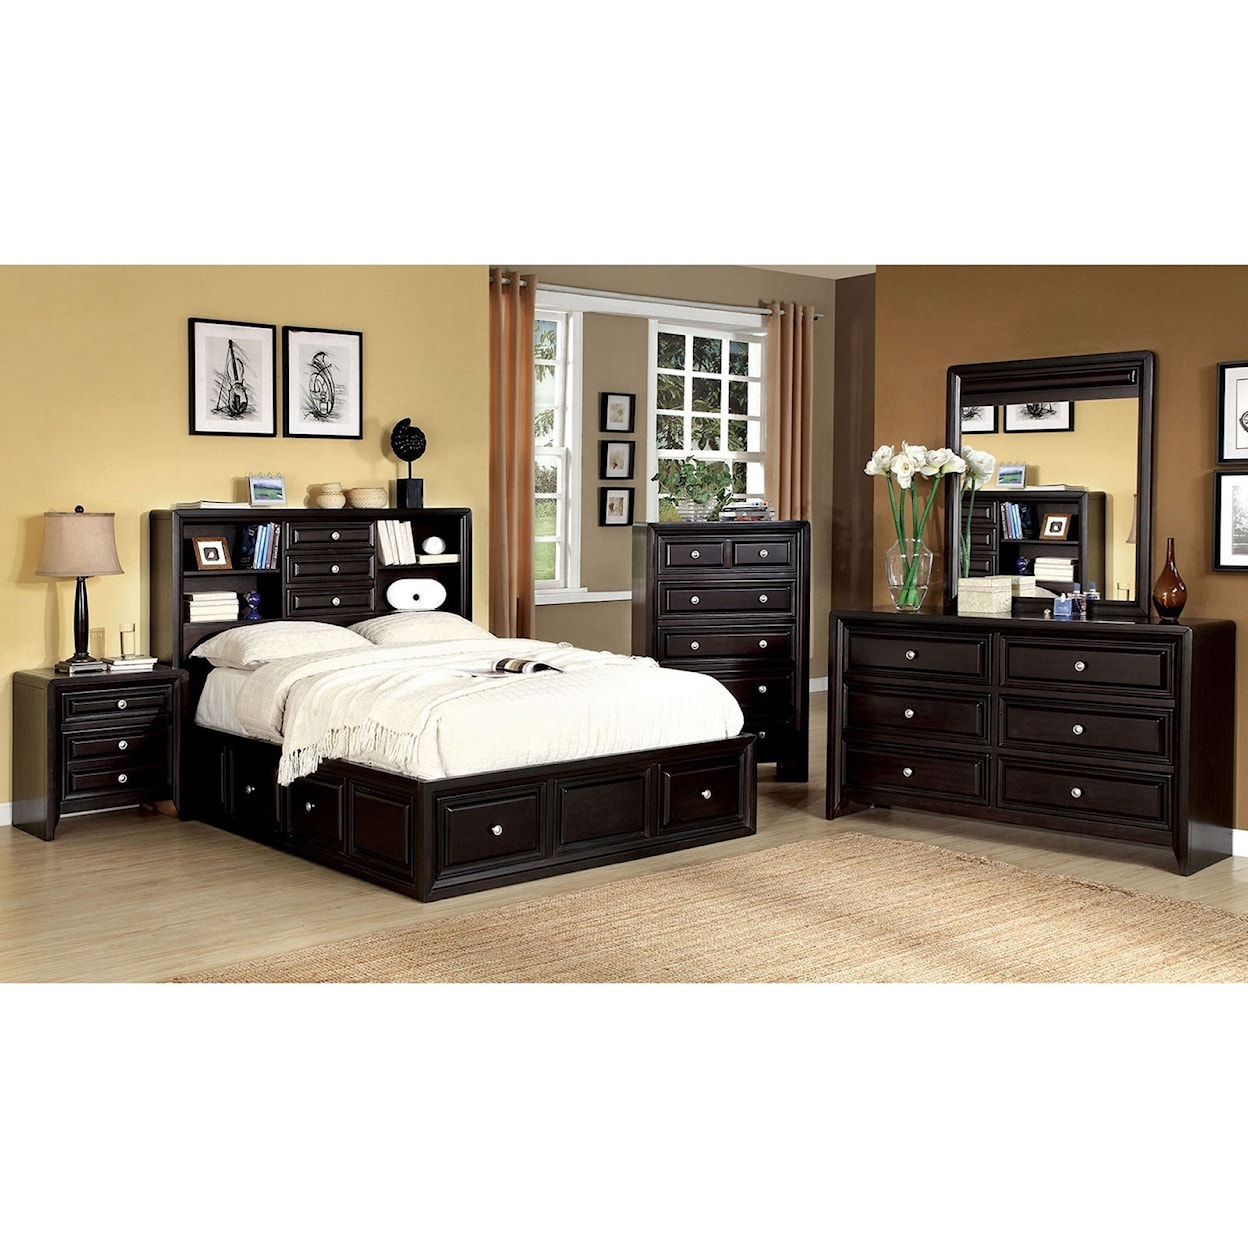 Furniture of America Yorkville Queen Bedroom Group